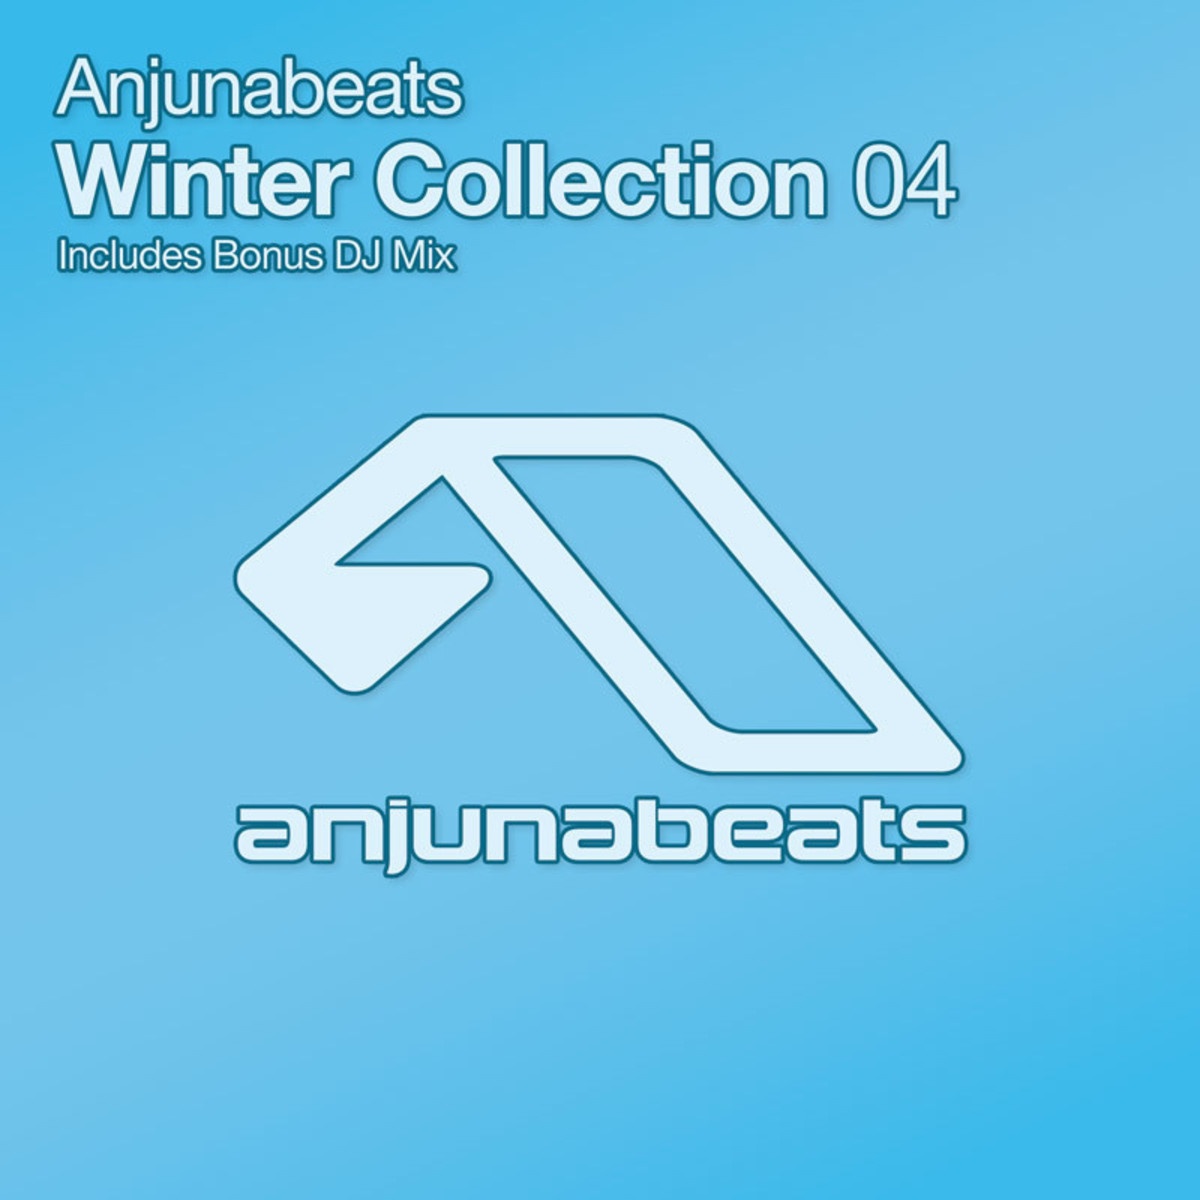 Anjunabeats Winter Collection 04